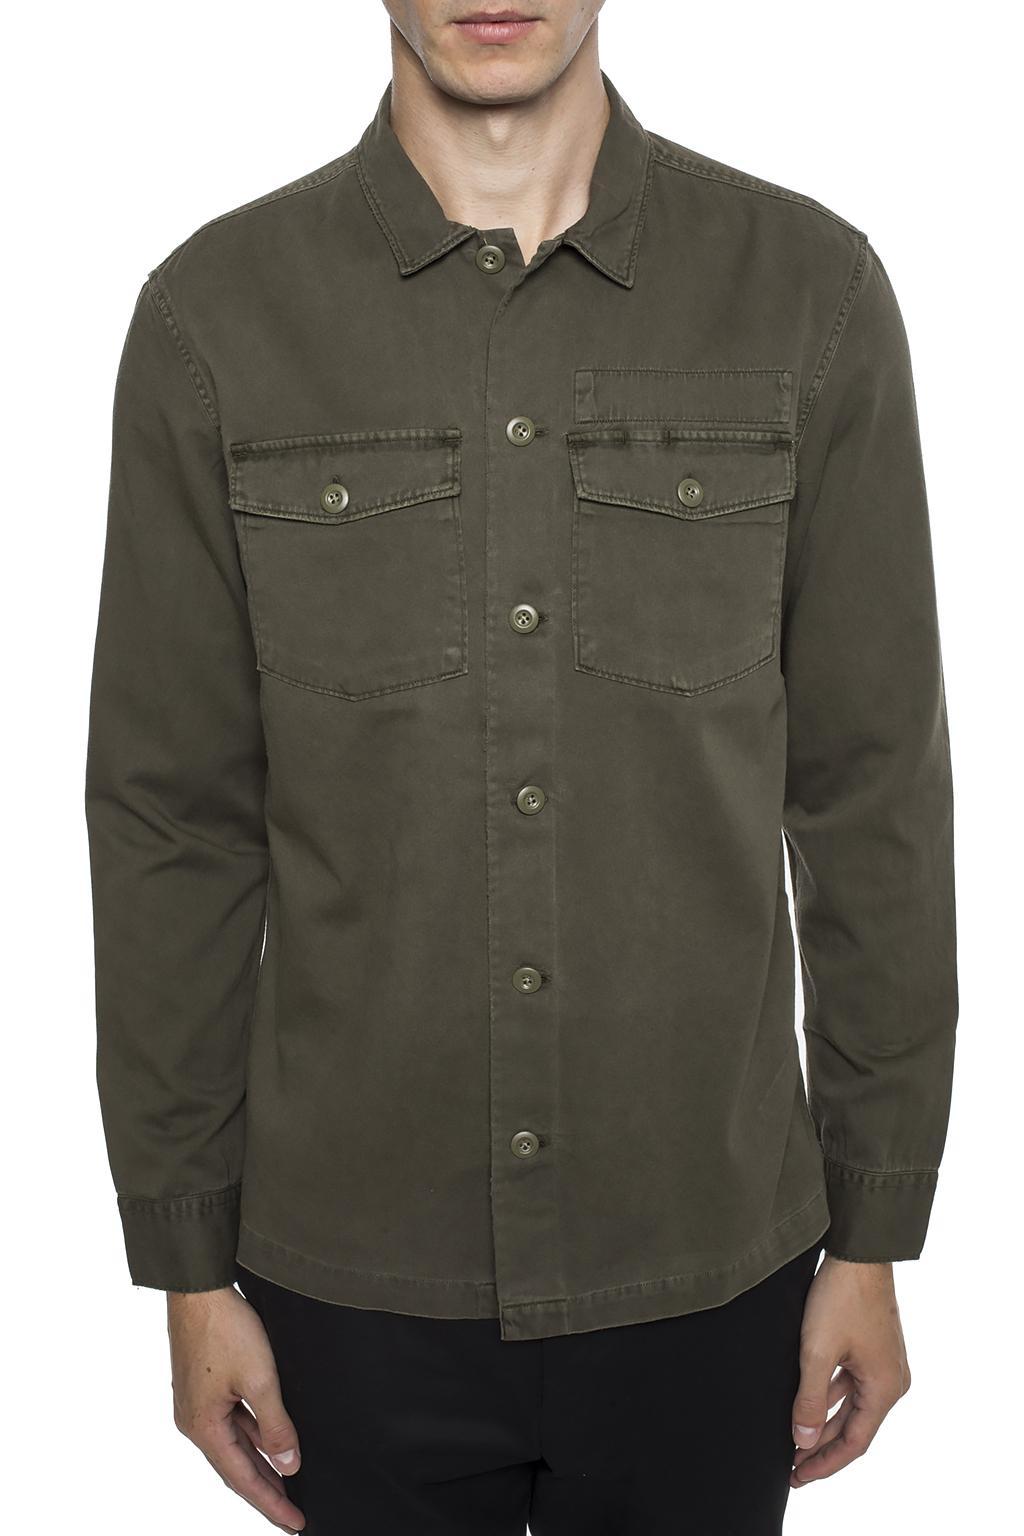 AllSaints Cotton 'spotter Ls' Raw Edge Shirt Green for Men - Lyst